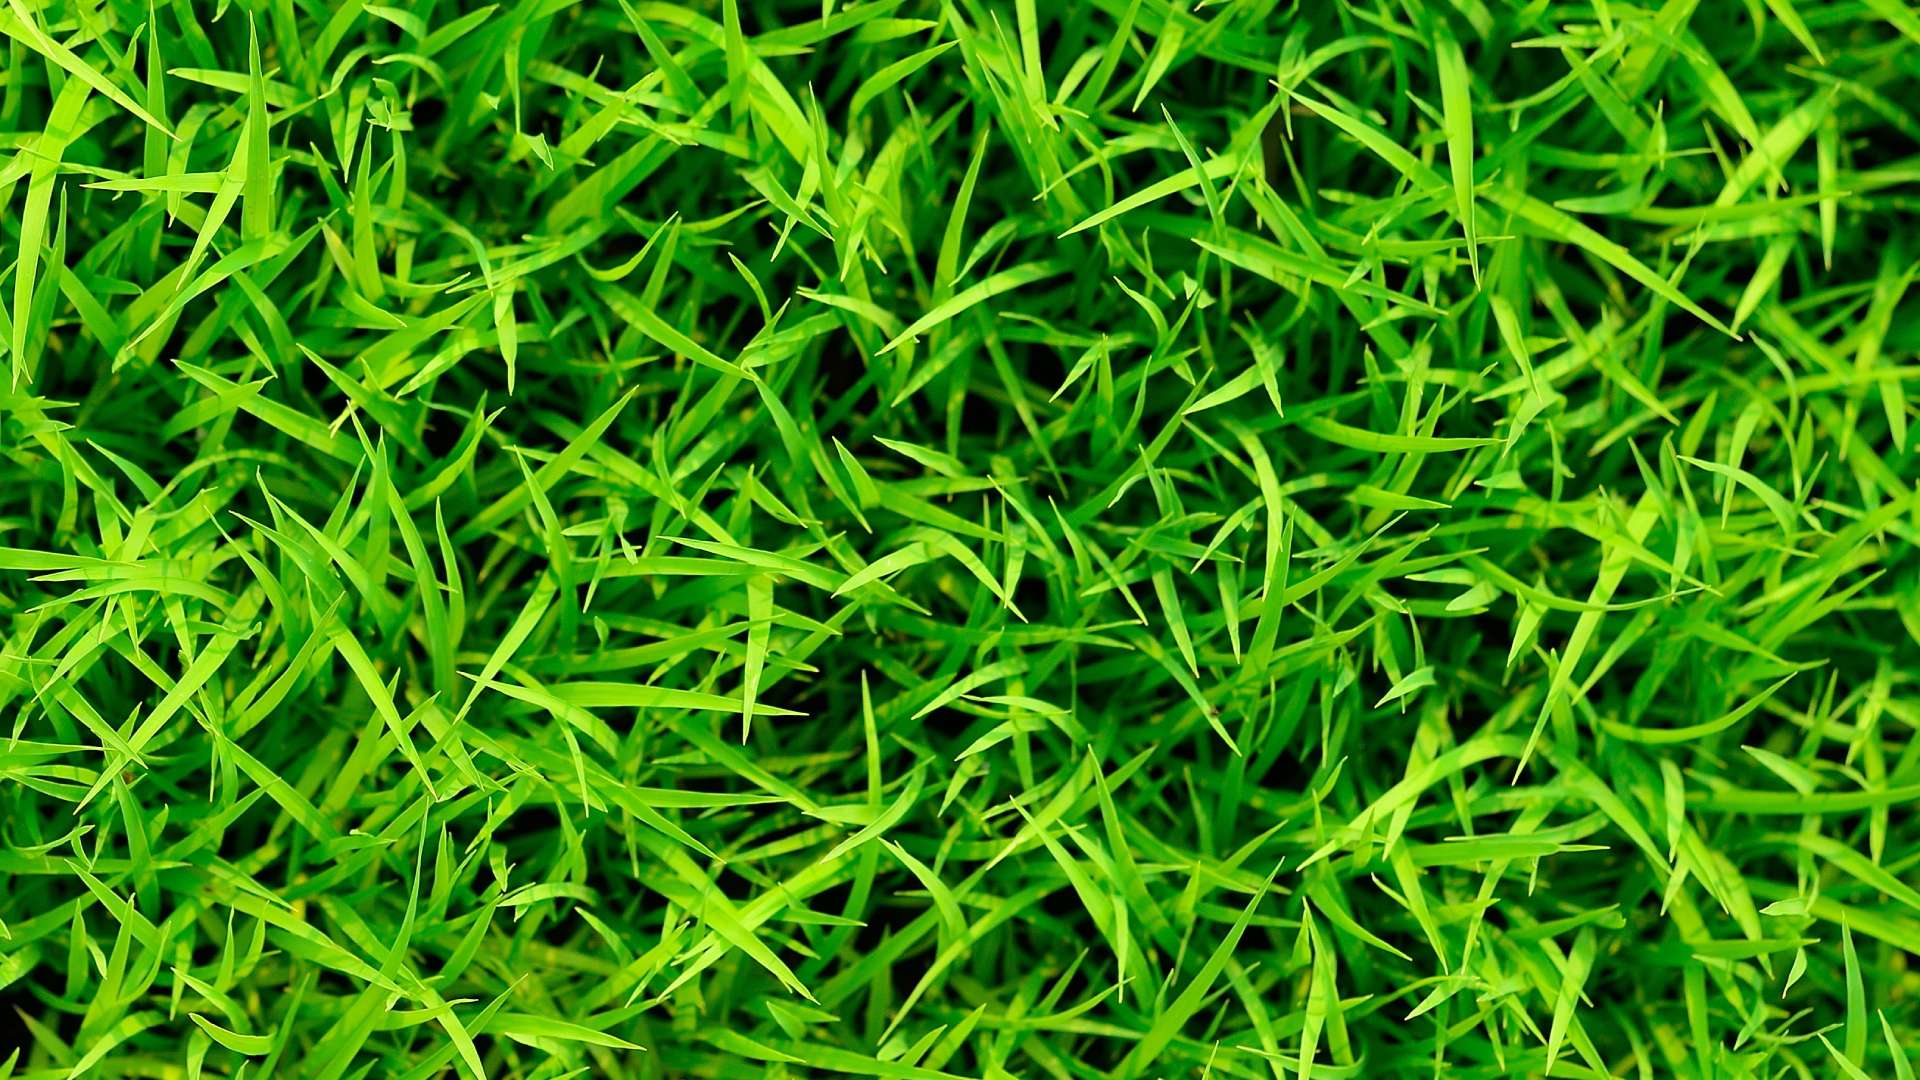 Vibrant grass blades in Westfield, IN.